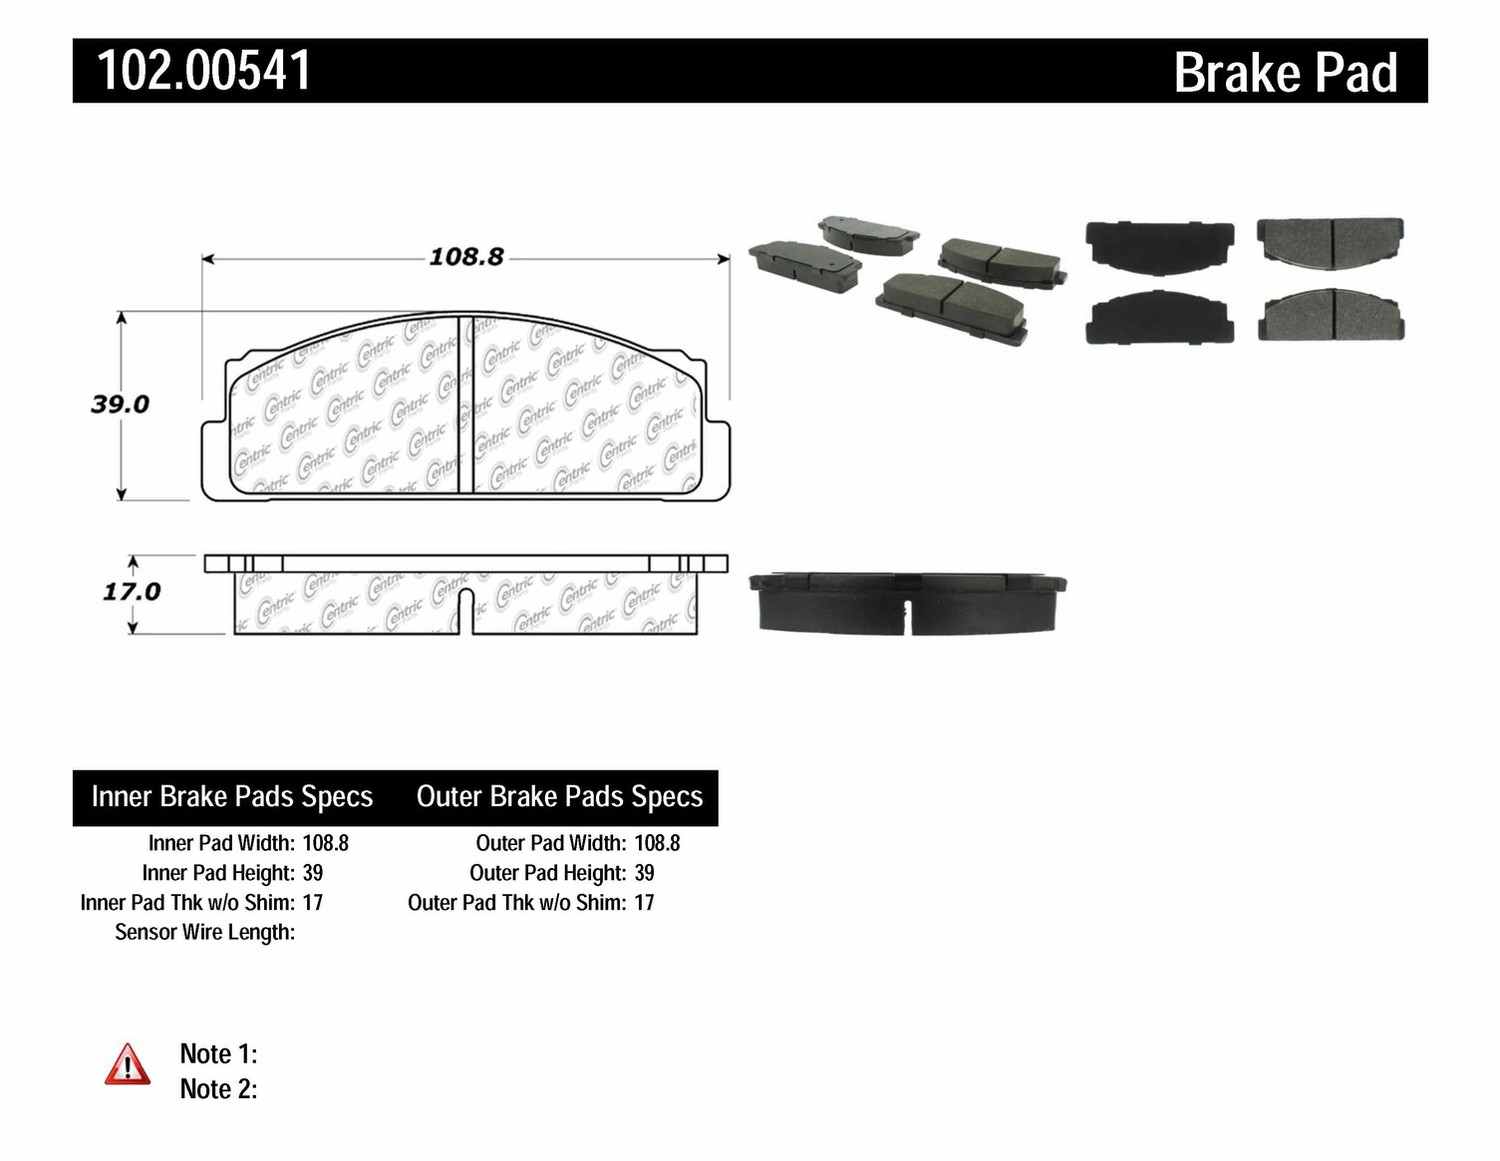 Foto de Pastillas de Freno C-TEK Metallic Pads-Preferred para Fiat 124 1968 Marca C-TEK Número de Parte 102.00541